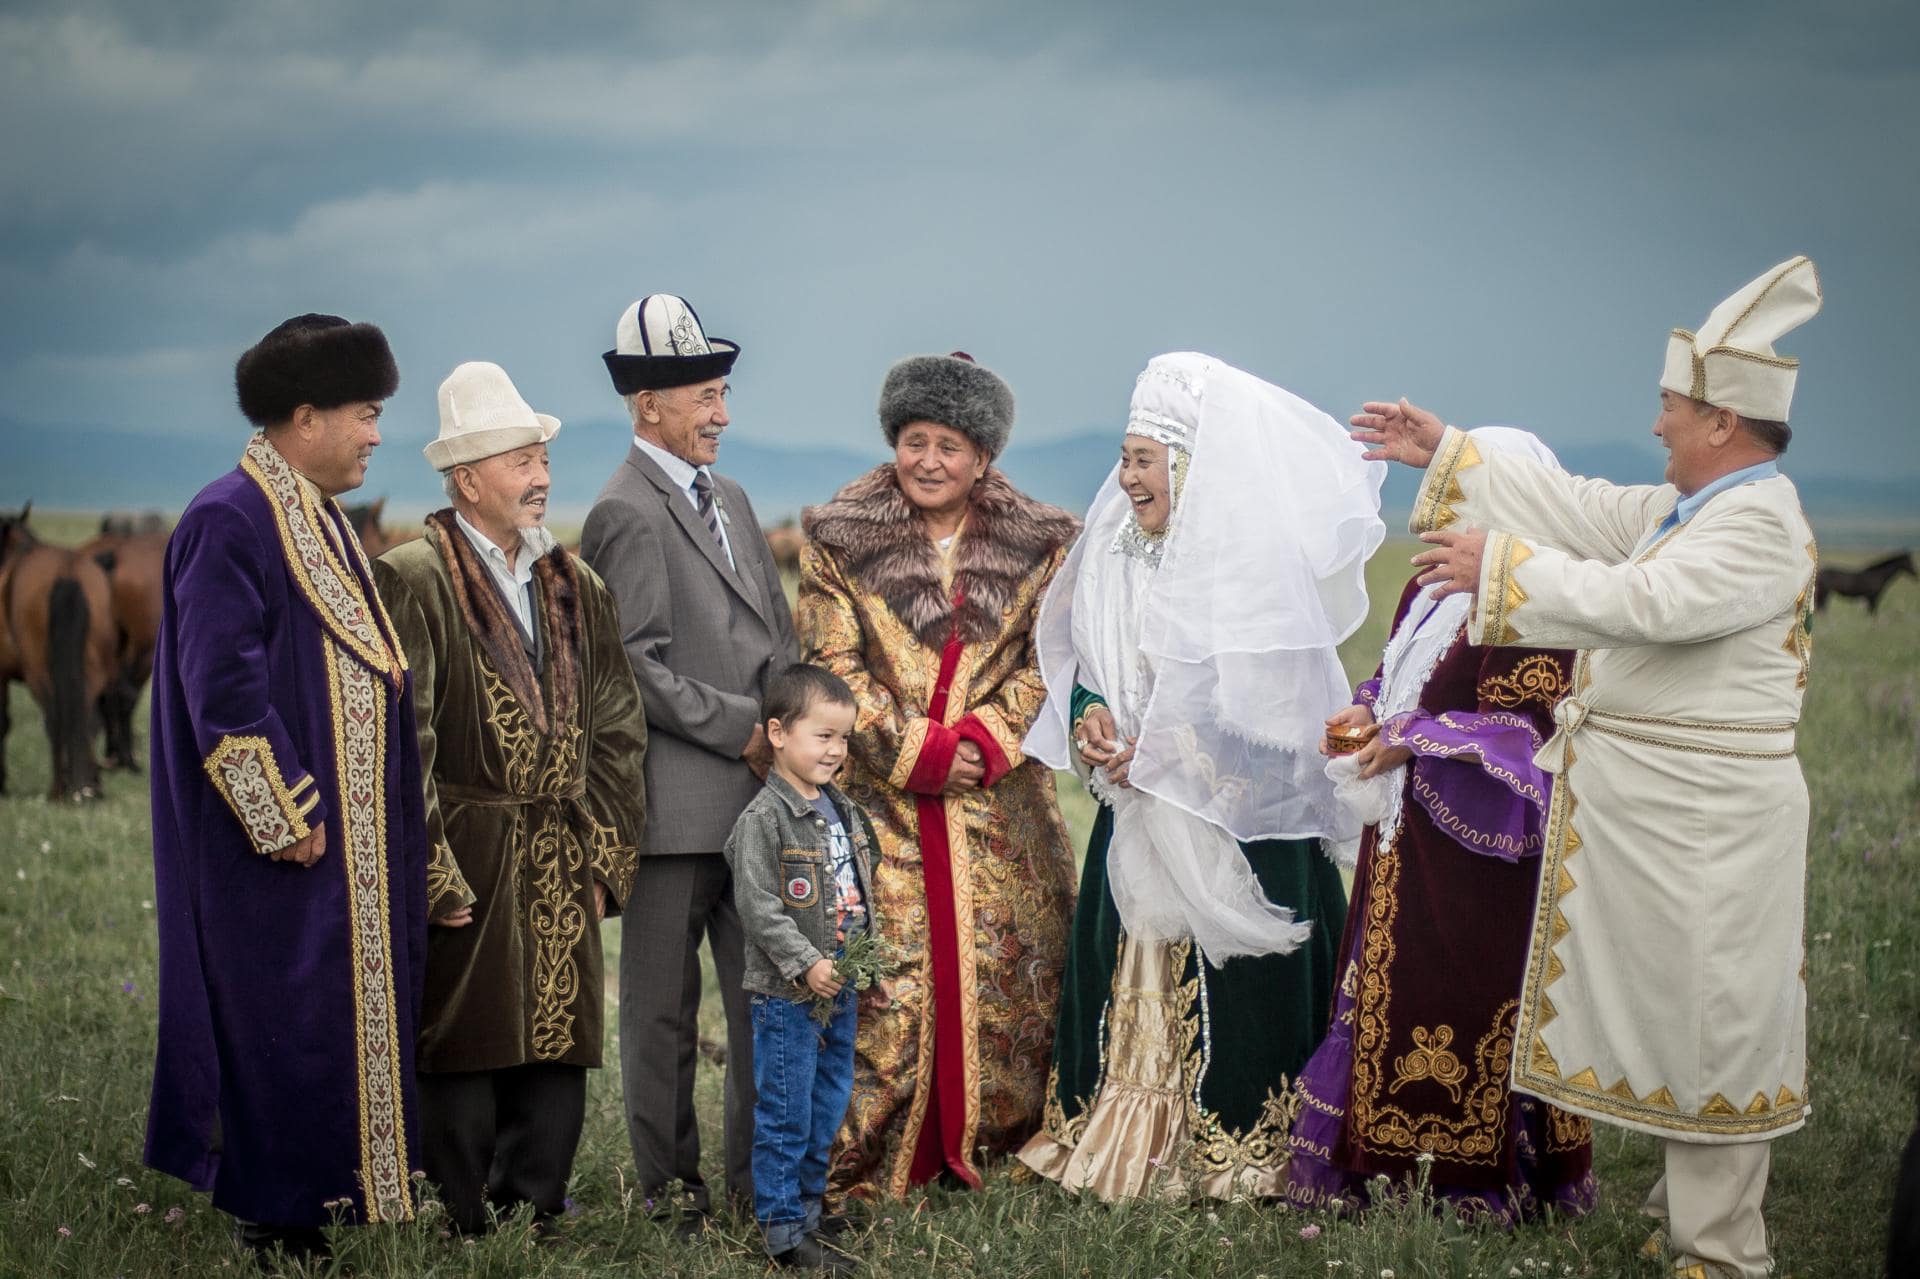 Отбасылық құндылықтар. Казахская семья. Казахская семья в национальных костюмах. Национальная одежда казахов. Казахская семья в национальной одежде.